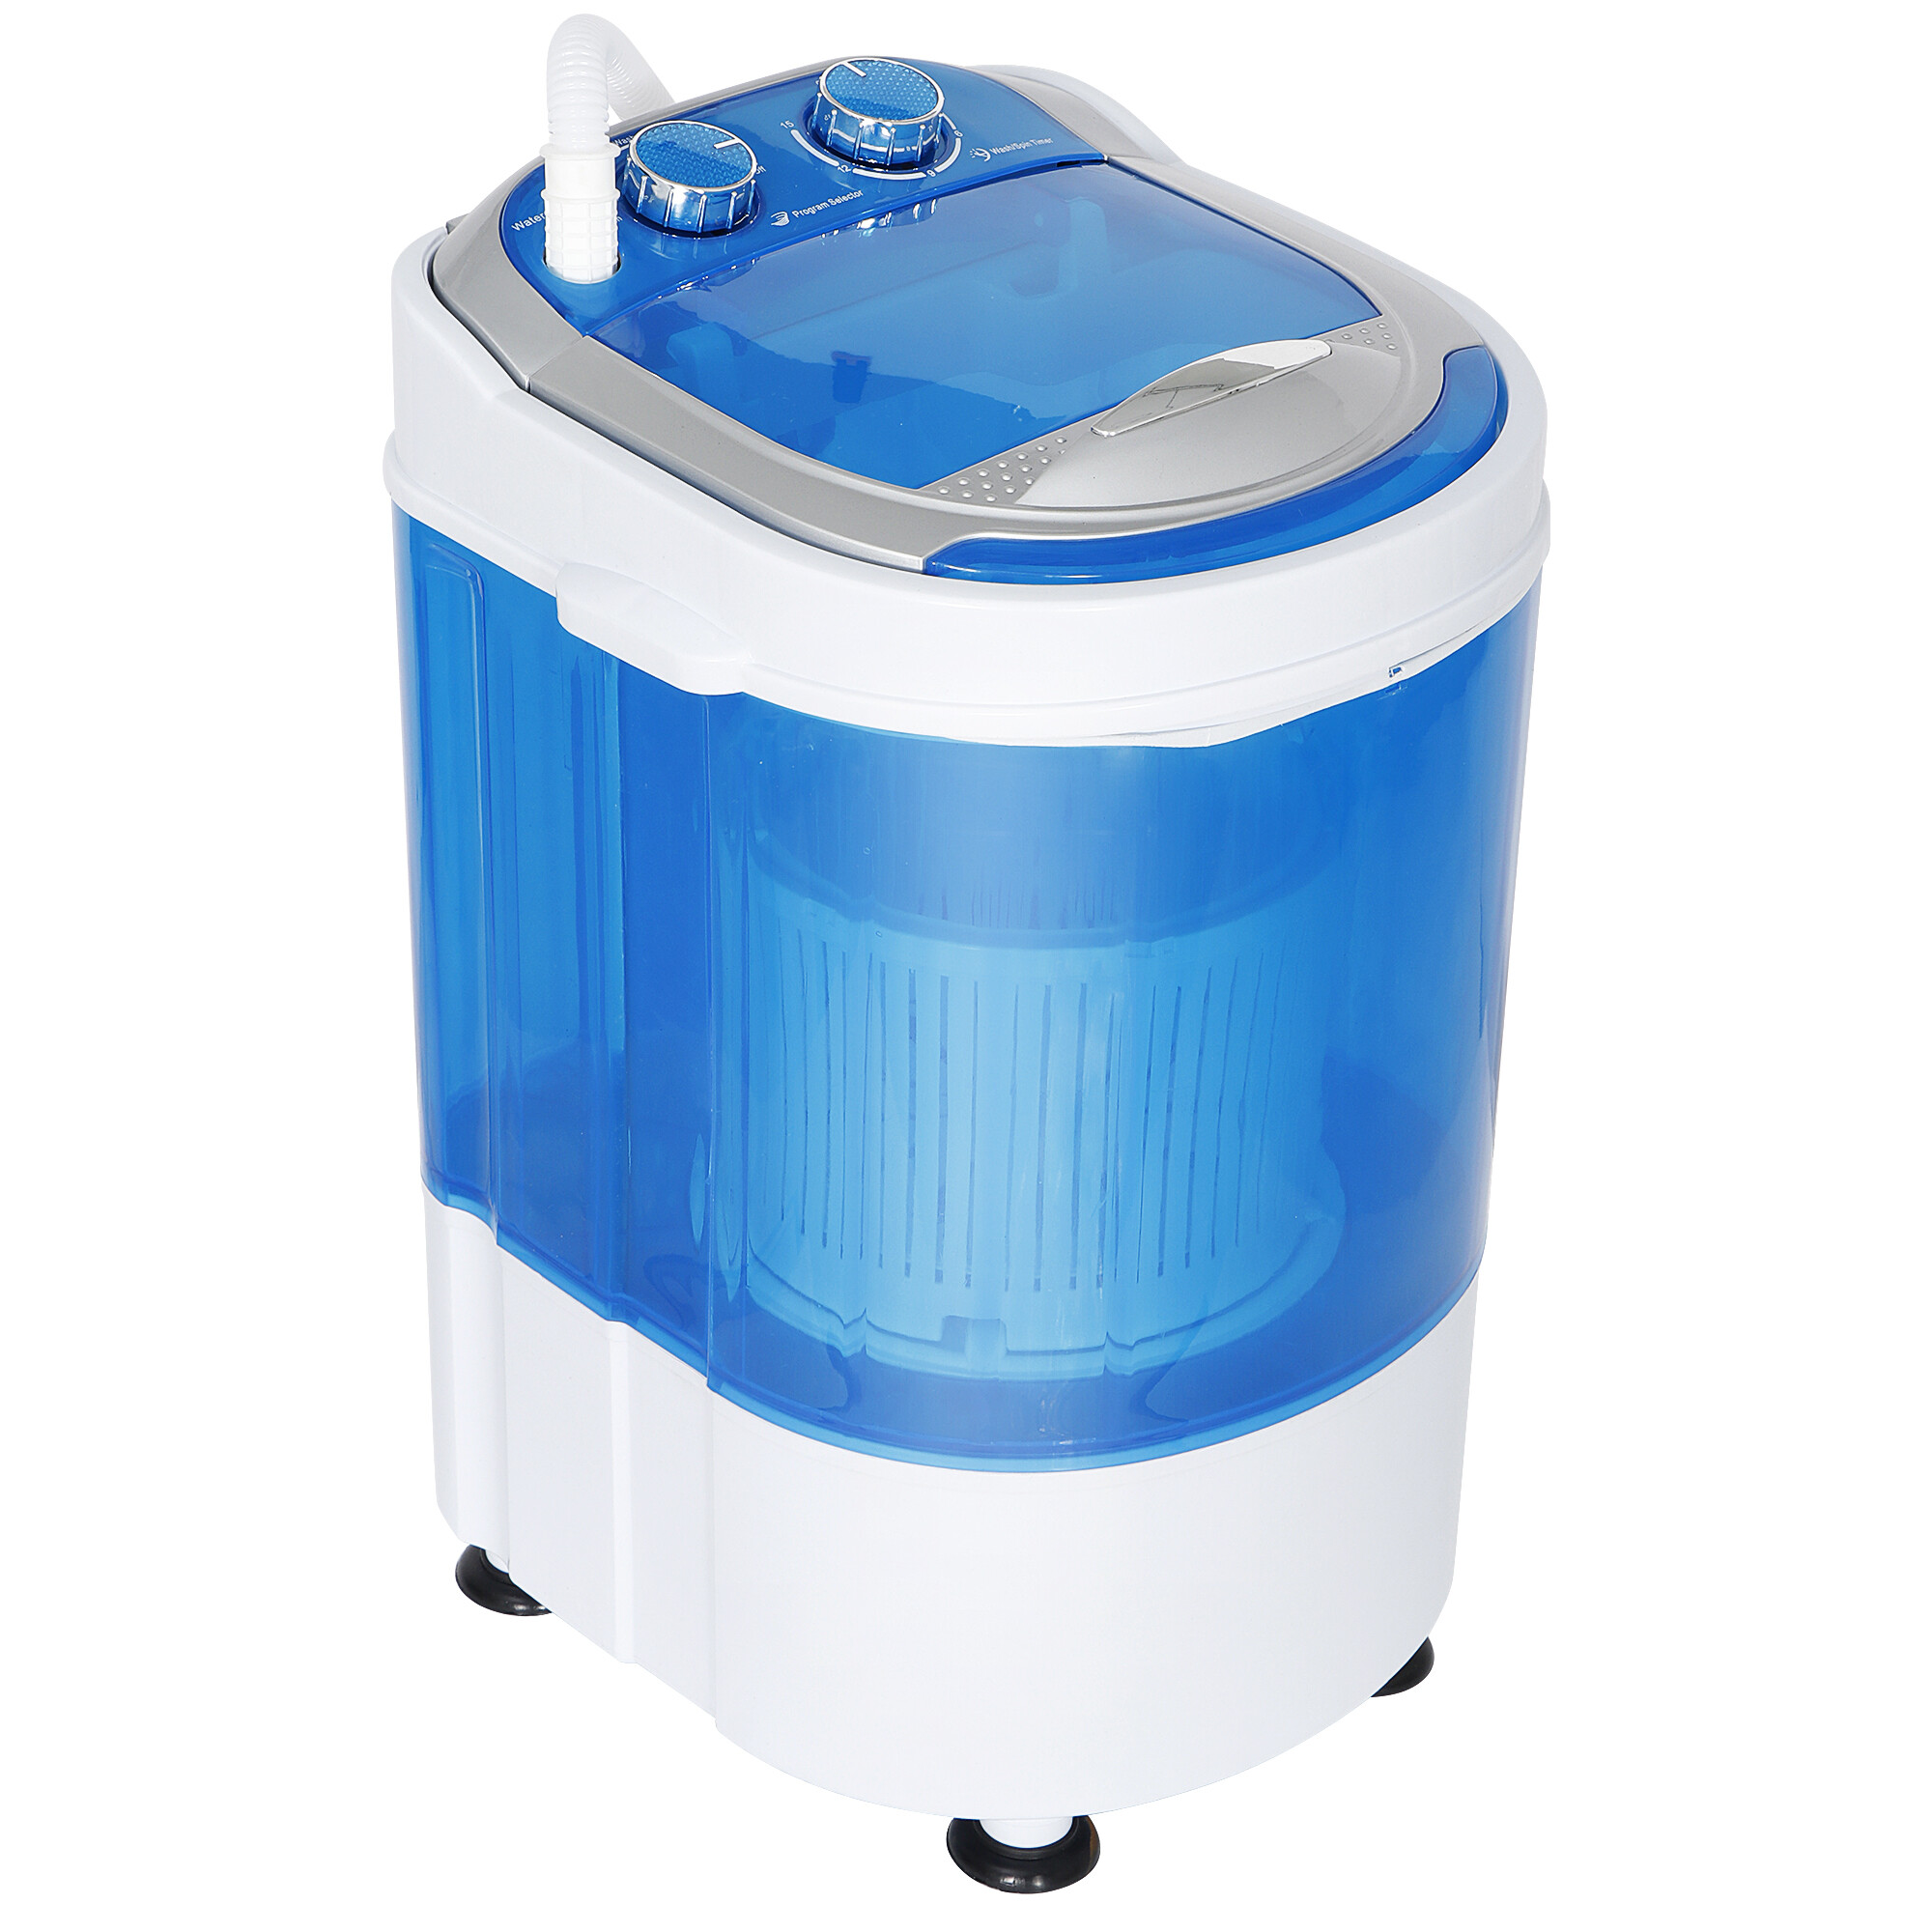 HomGarden 6.6lbs Capacity Portable Mini Washing Machine, Top-Load